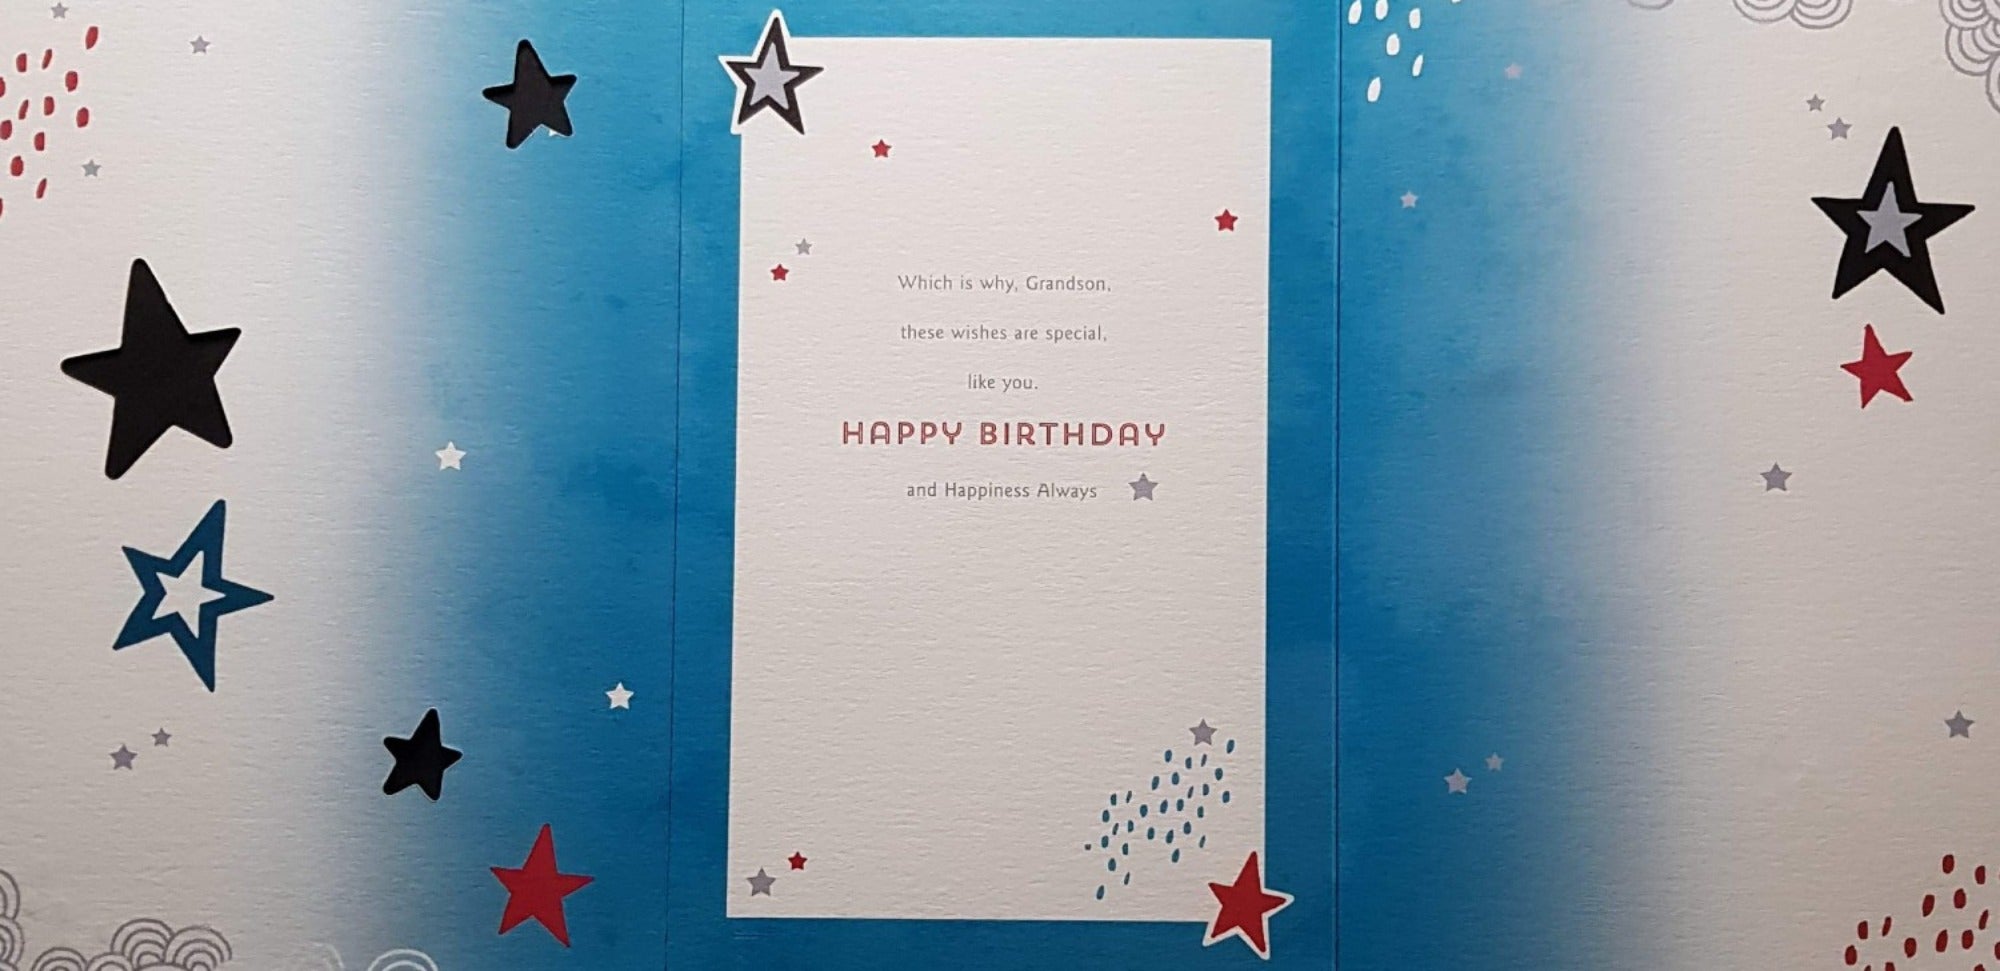 Birthday Card - Grandson / Star Fishes